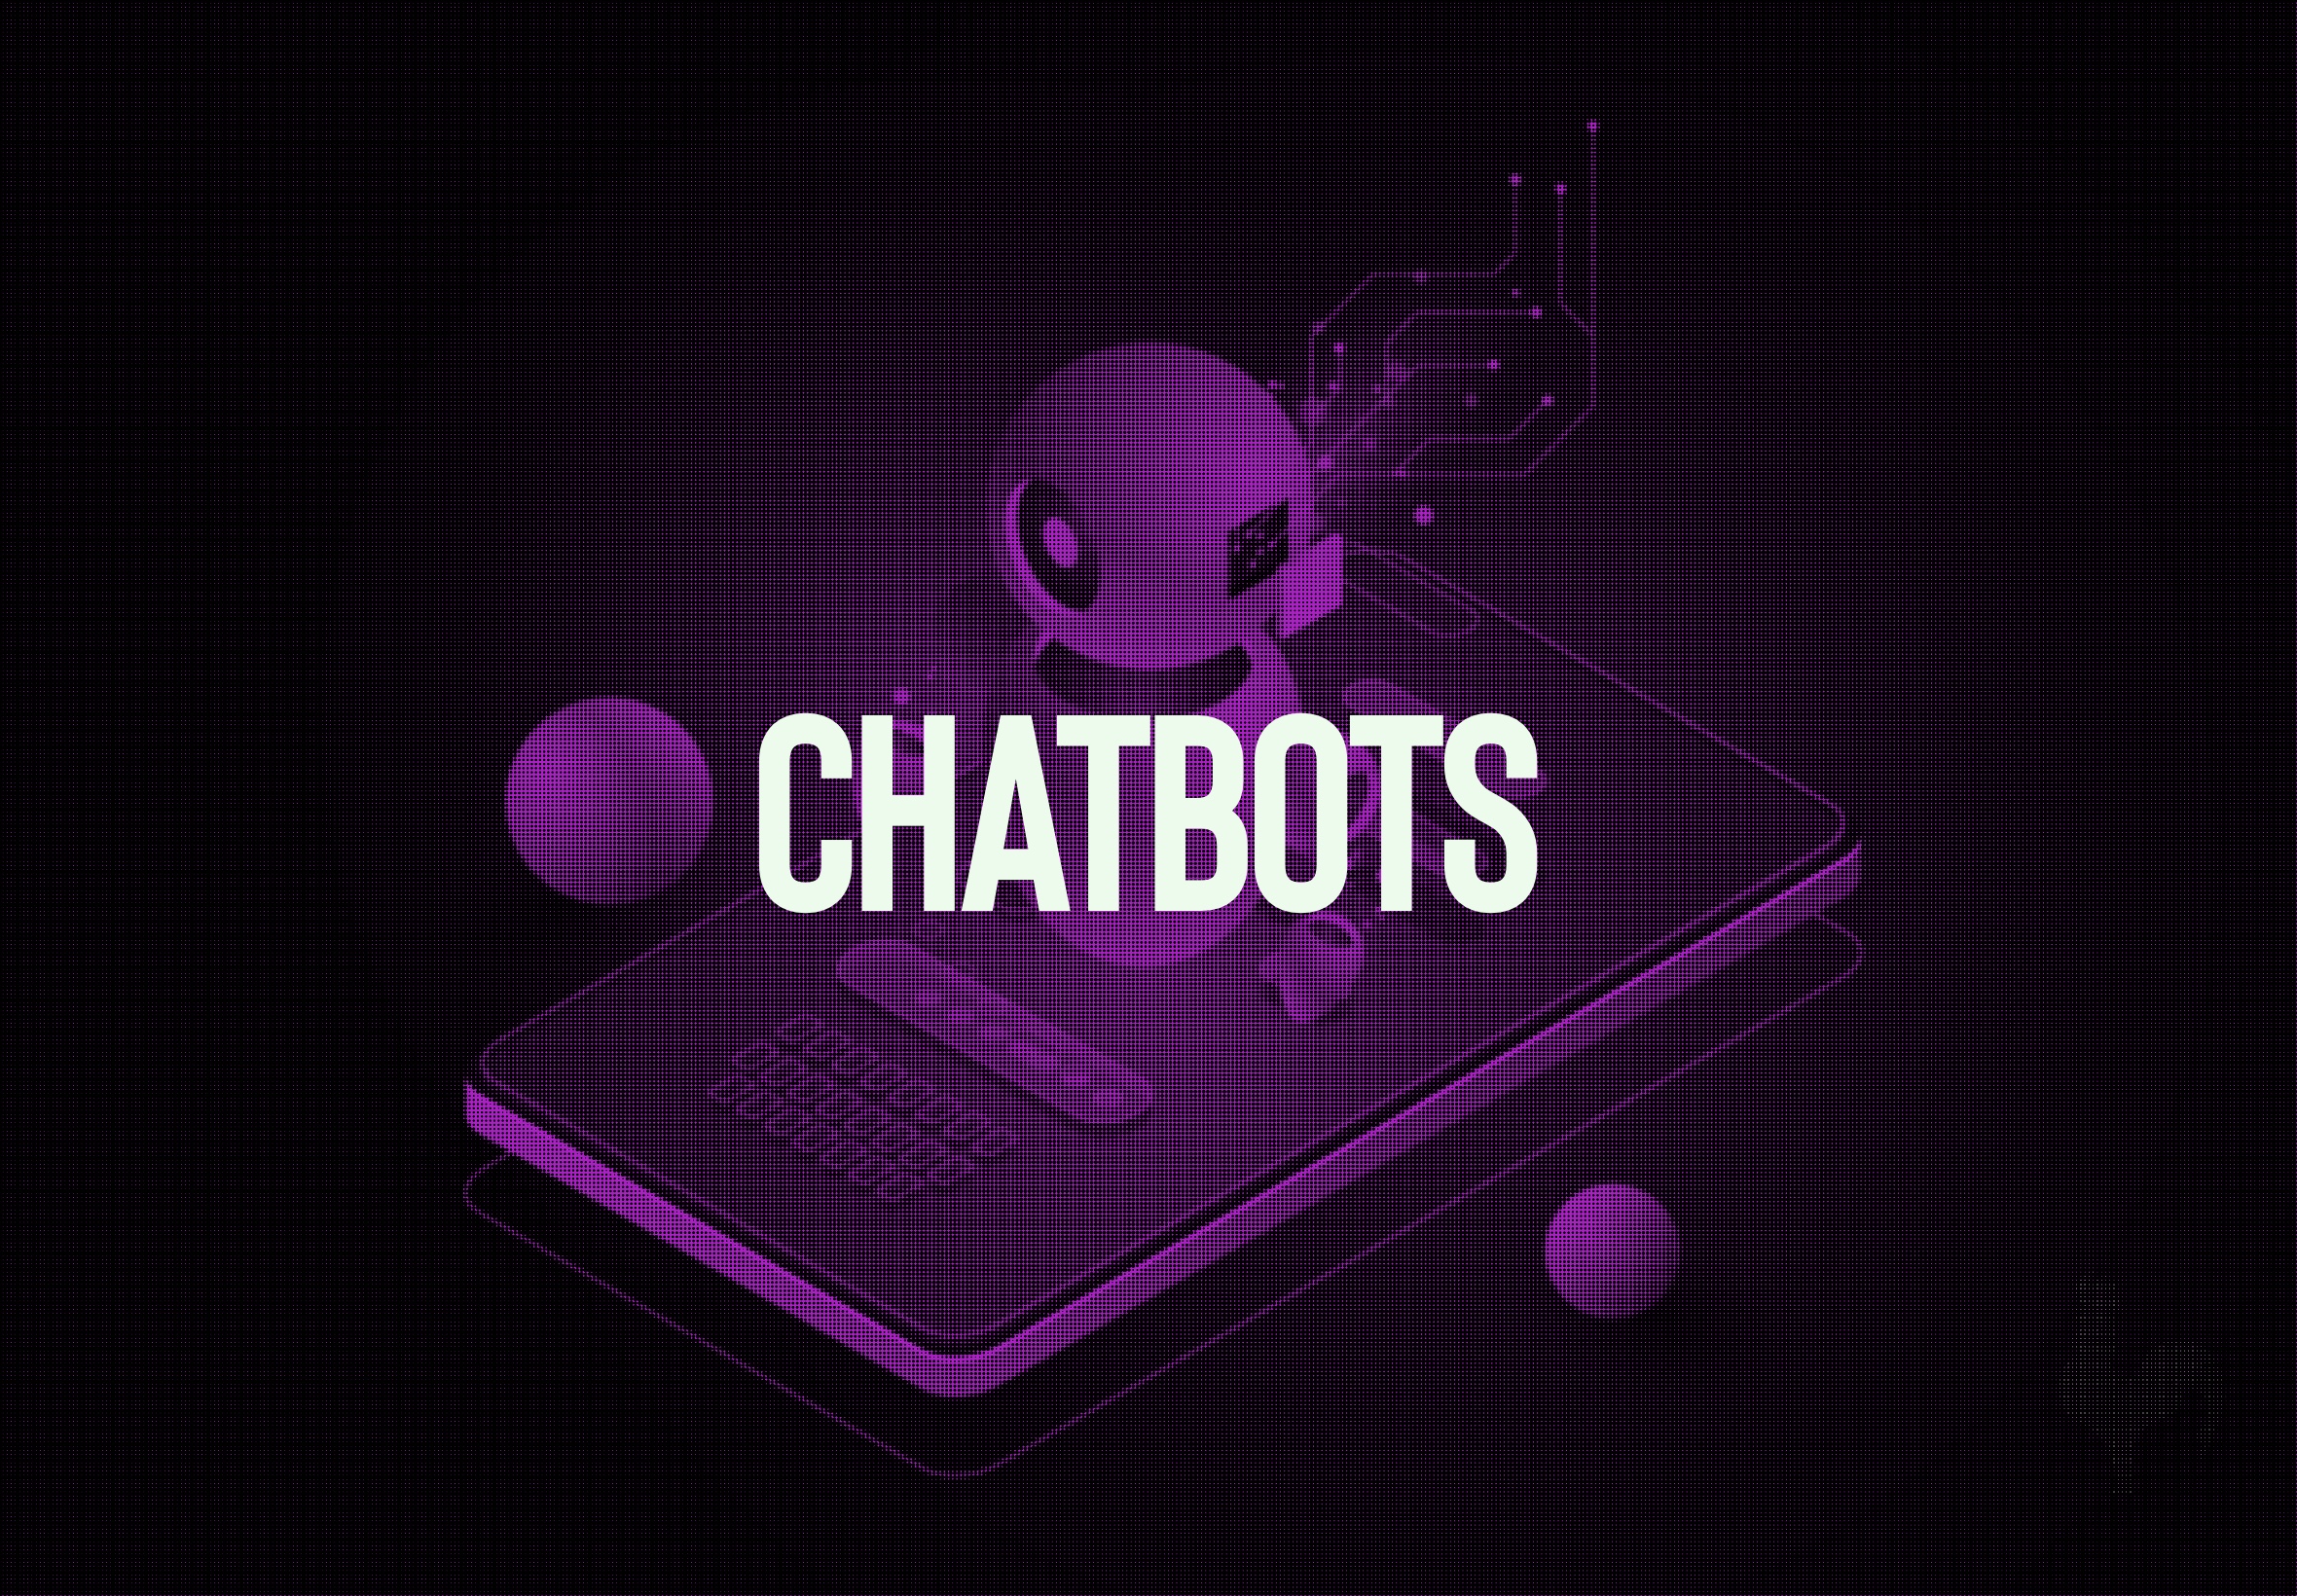 El Ascenso Imparable de los Chatbots